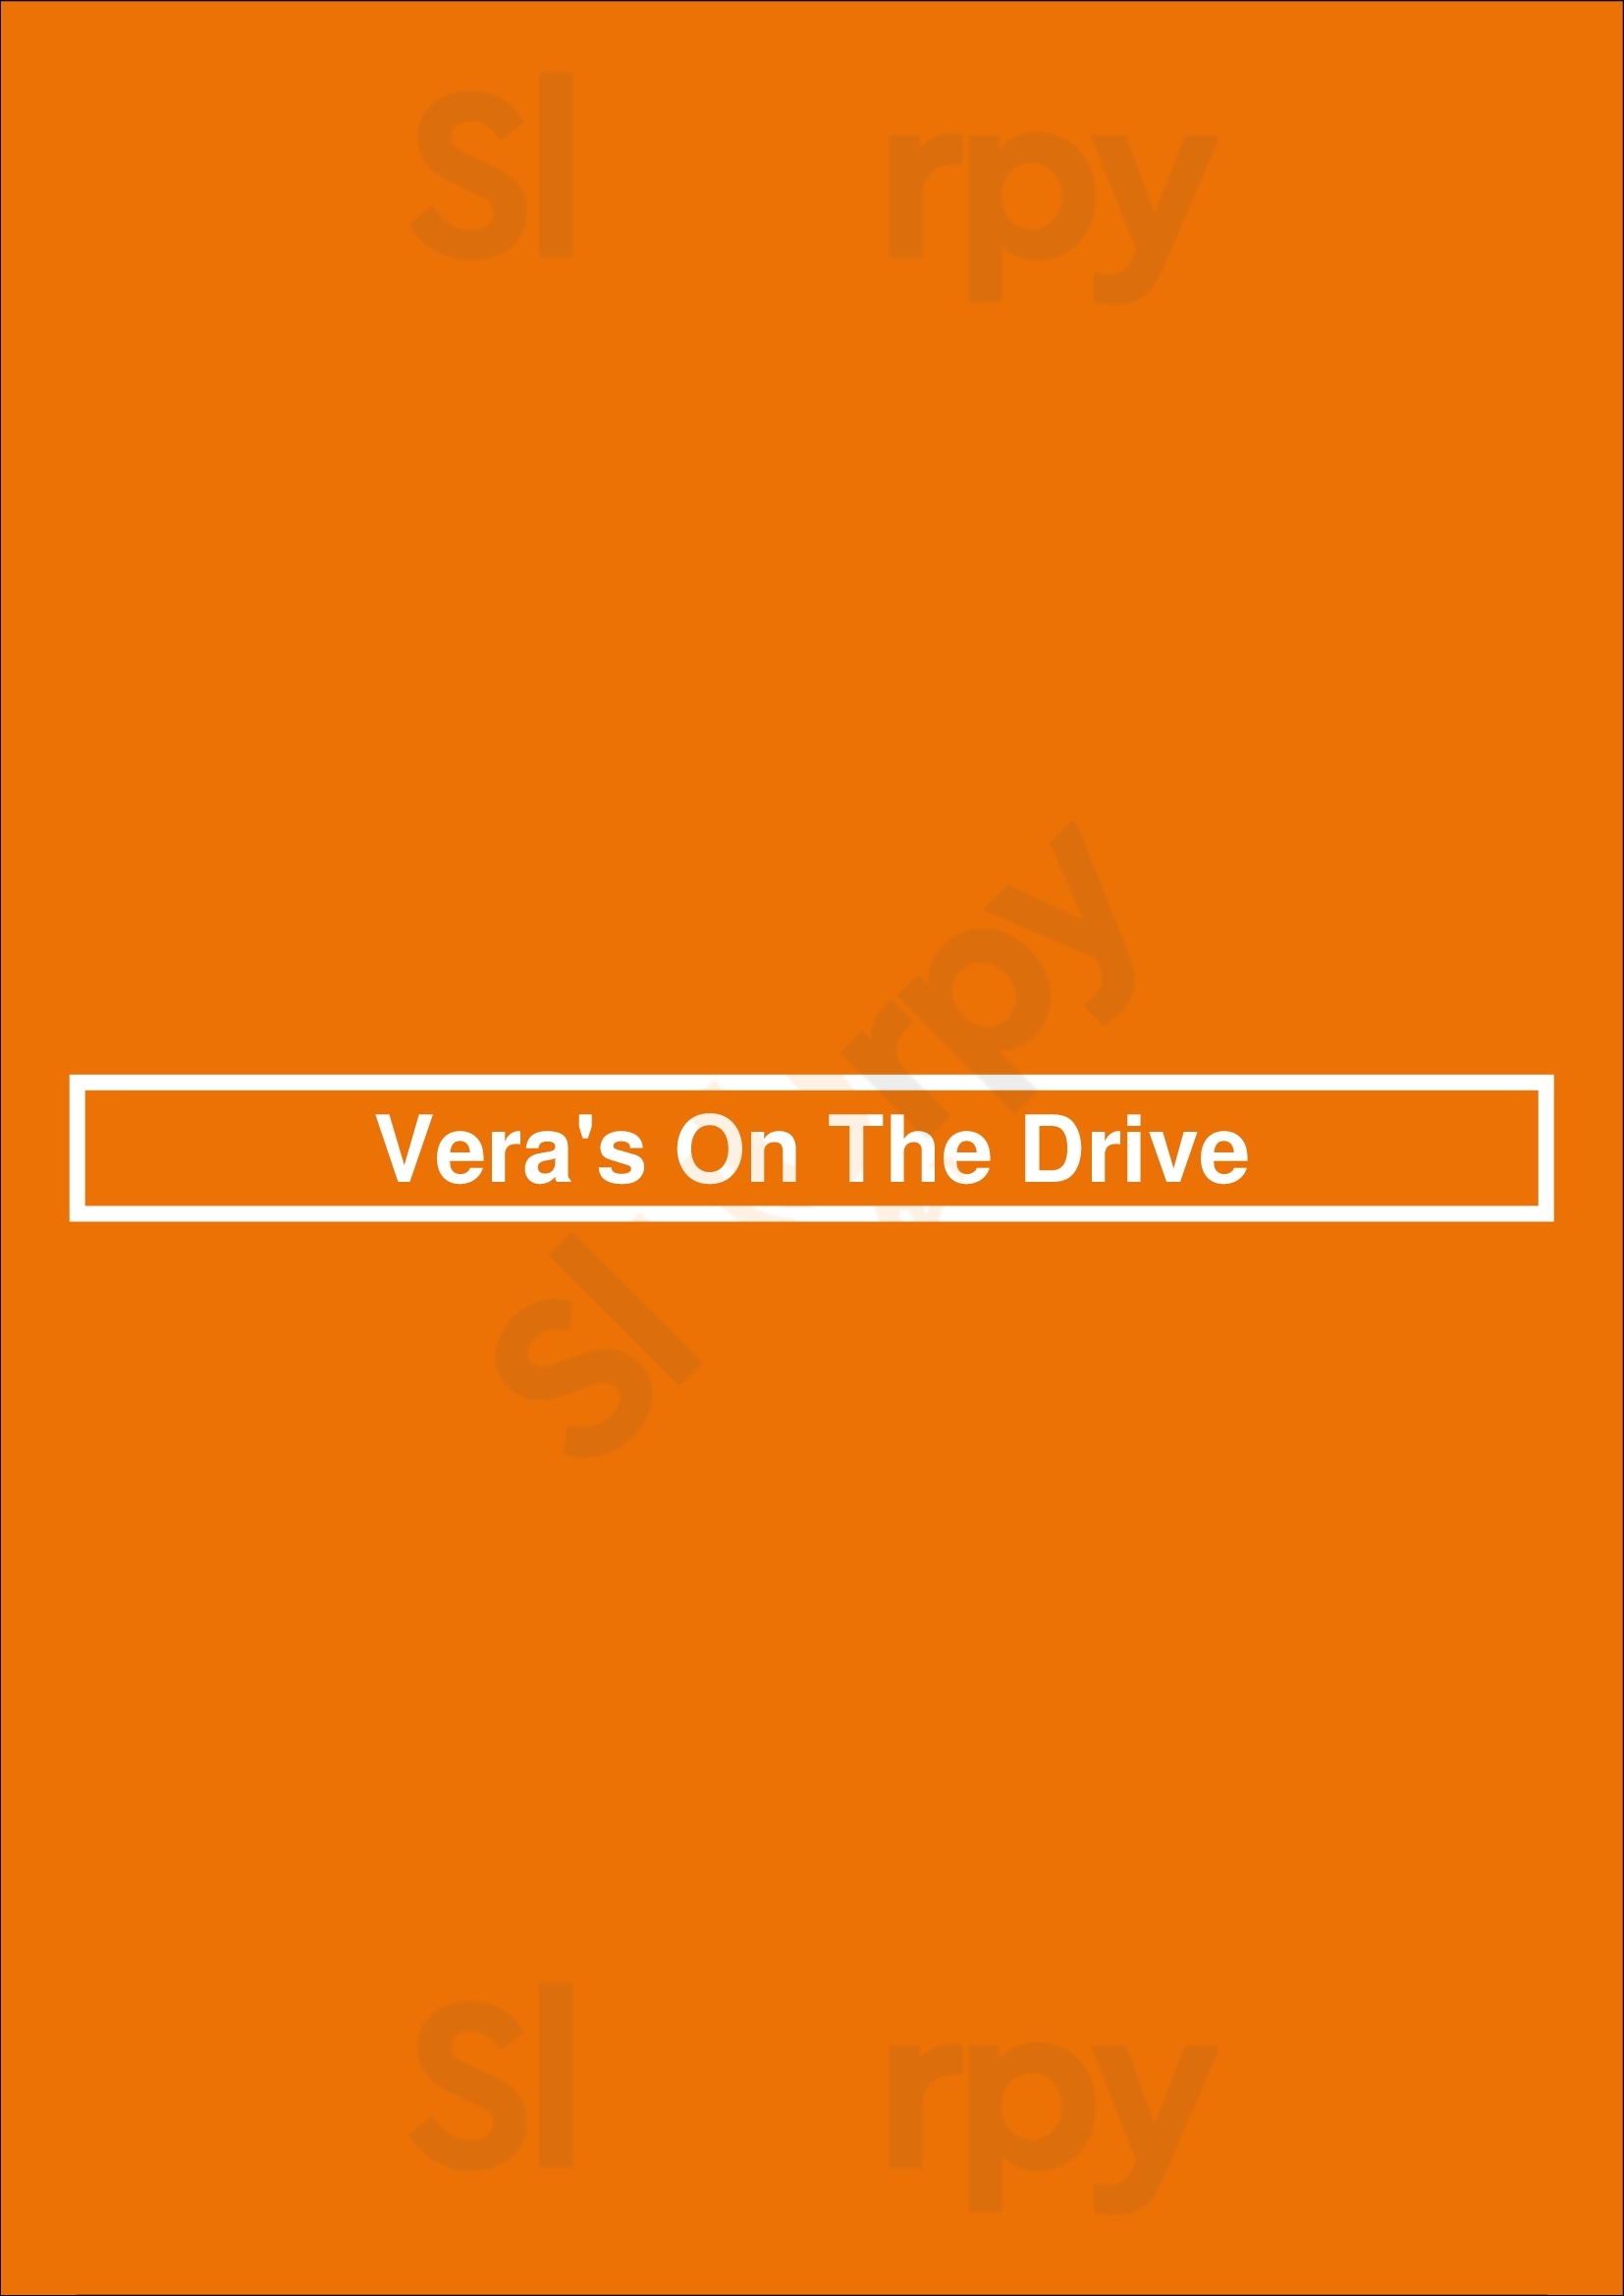 Vera's On The Drive Vancouver Menu - 1